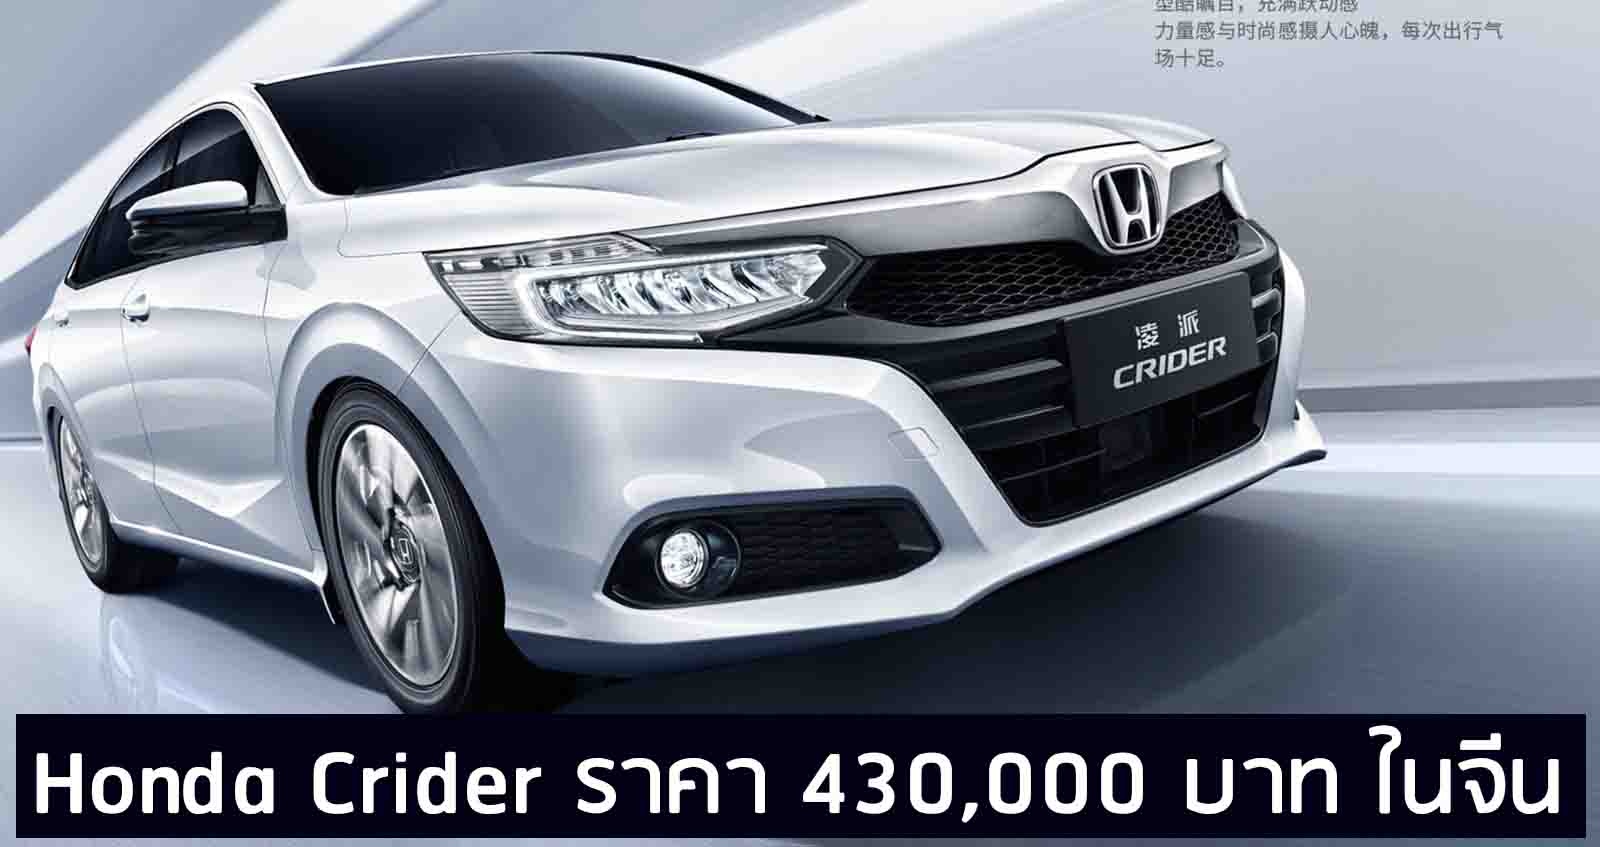 Honda Crider ราคา 430,000 บาท เมืองจีน ตัวถัง-เครื่องยนต์ ใหญ่กว่า CITY